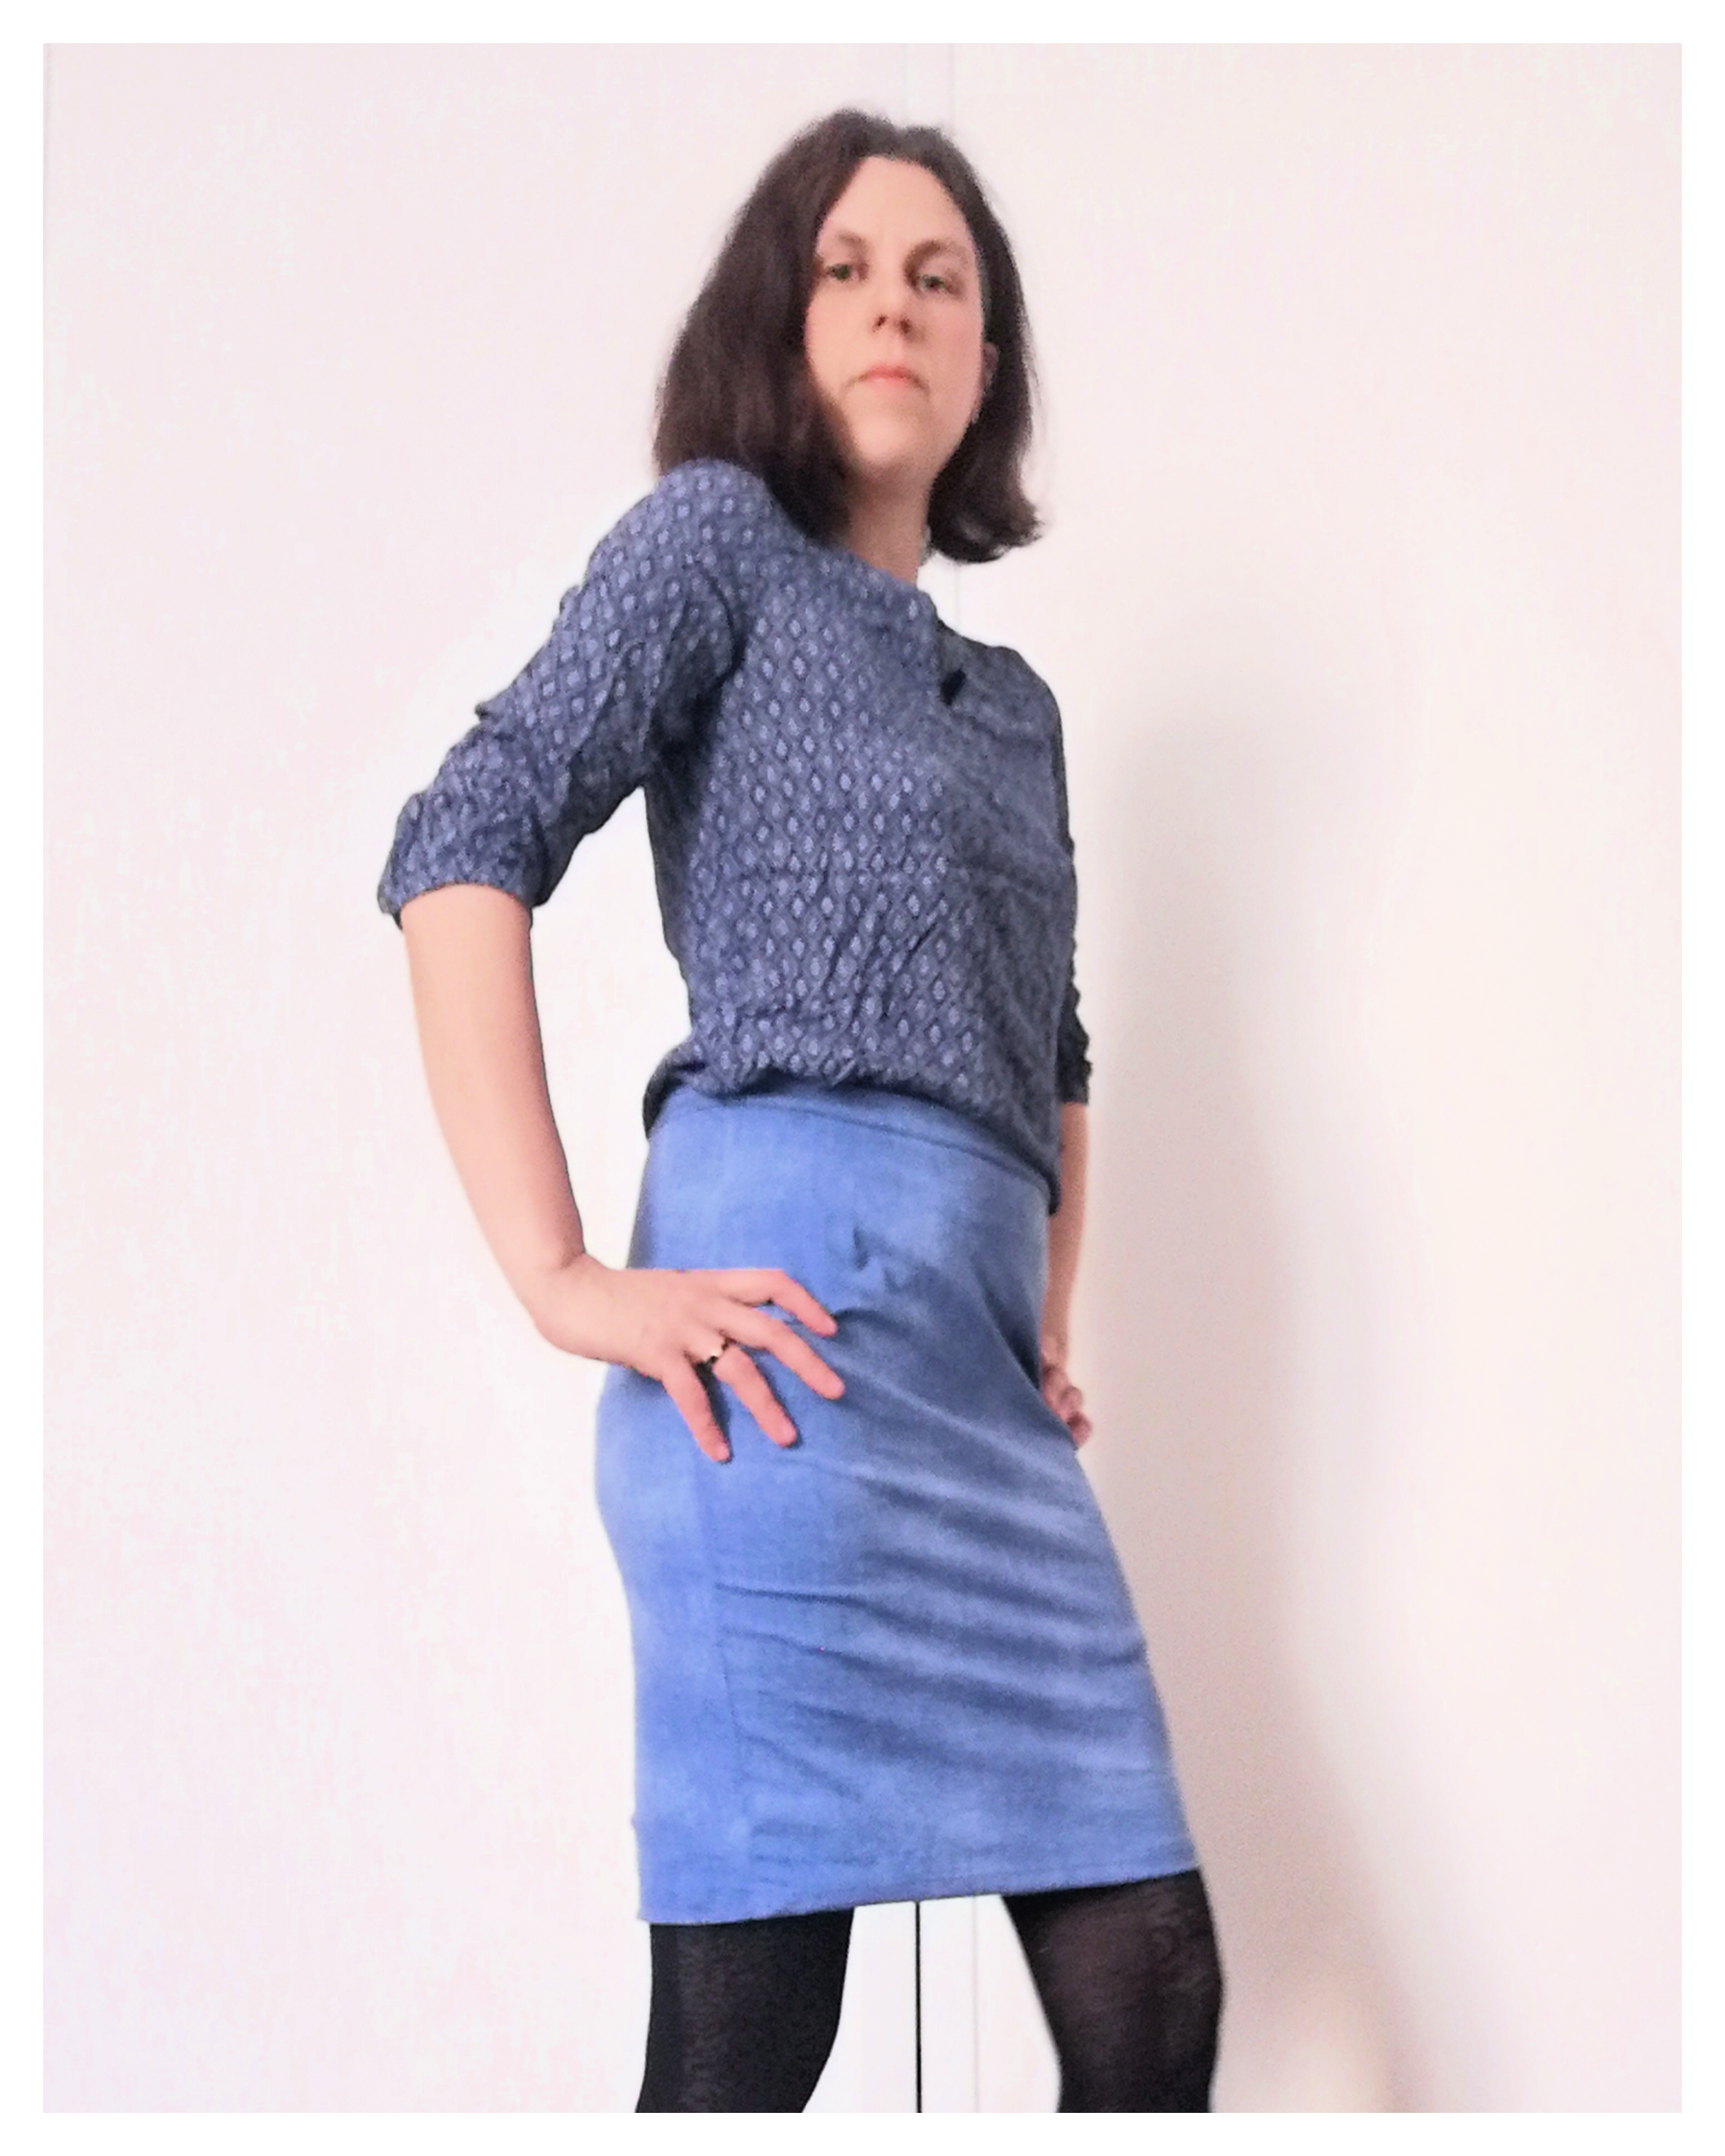 Premier Pencil Skirt Pattern